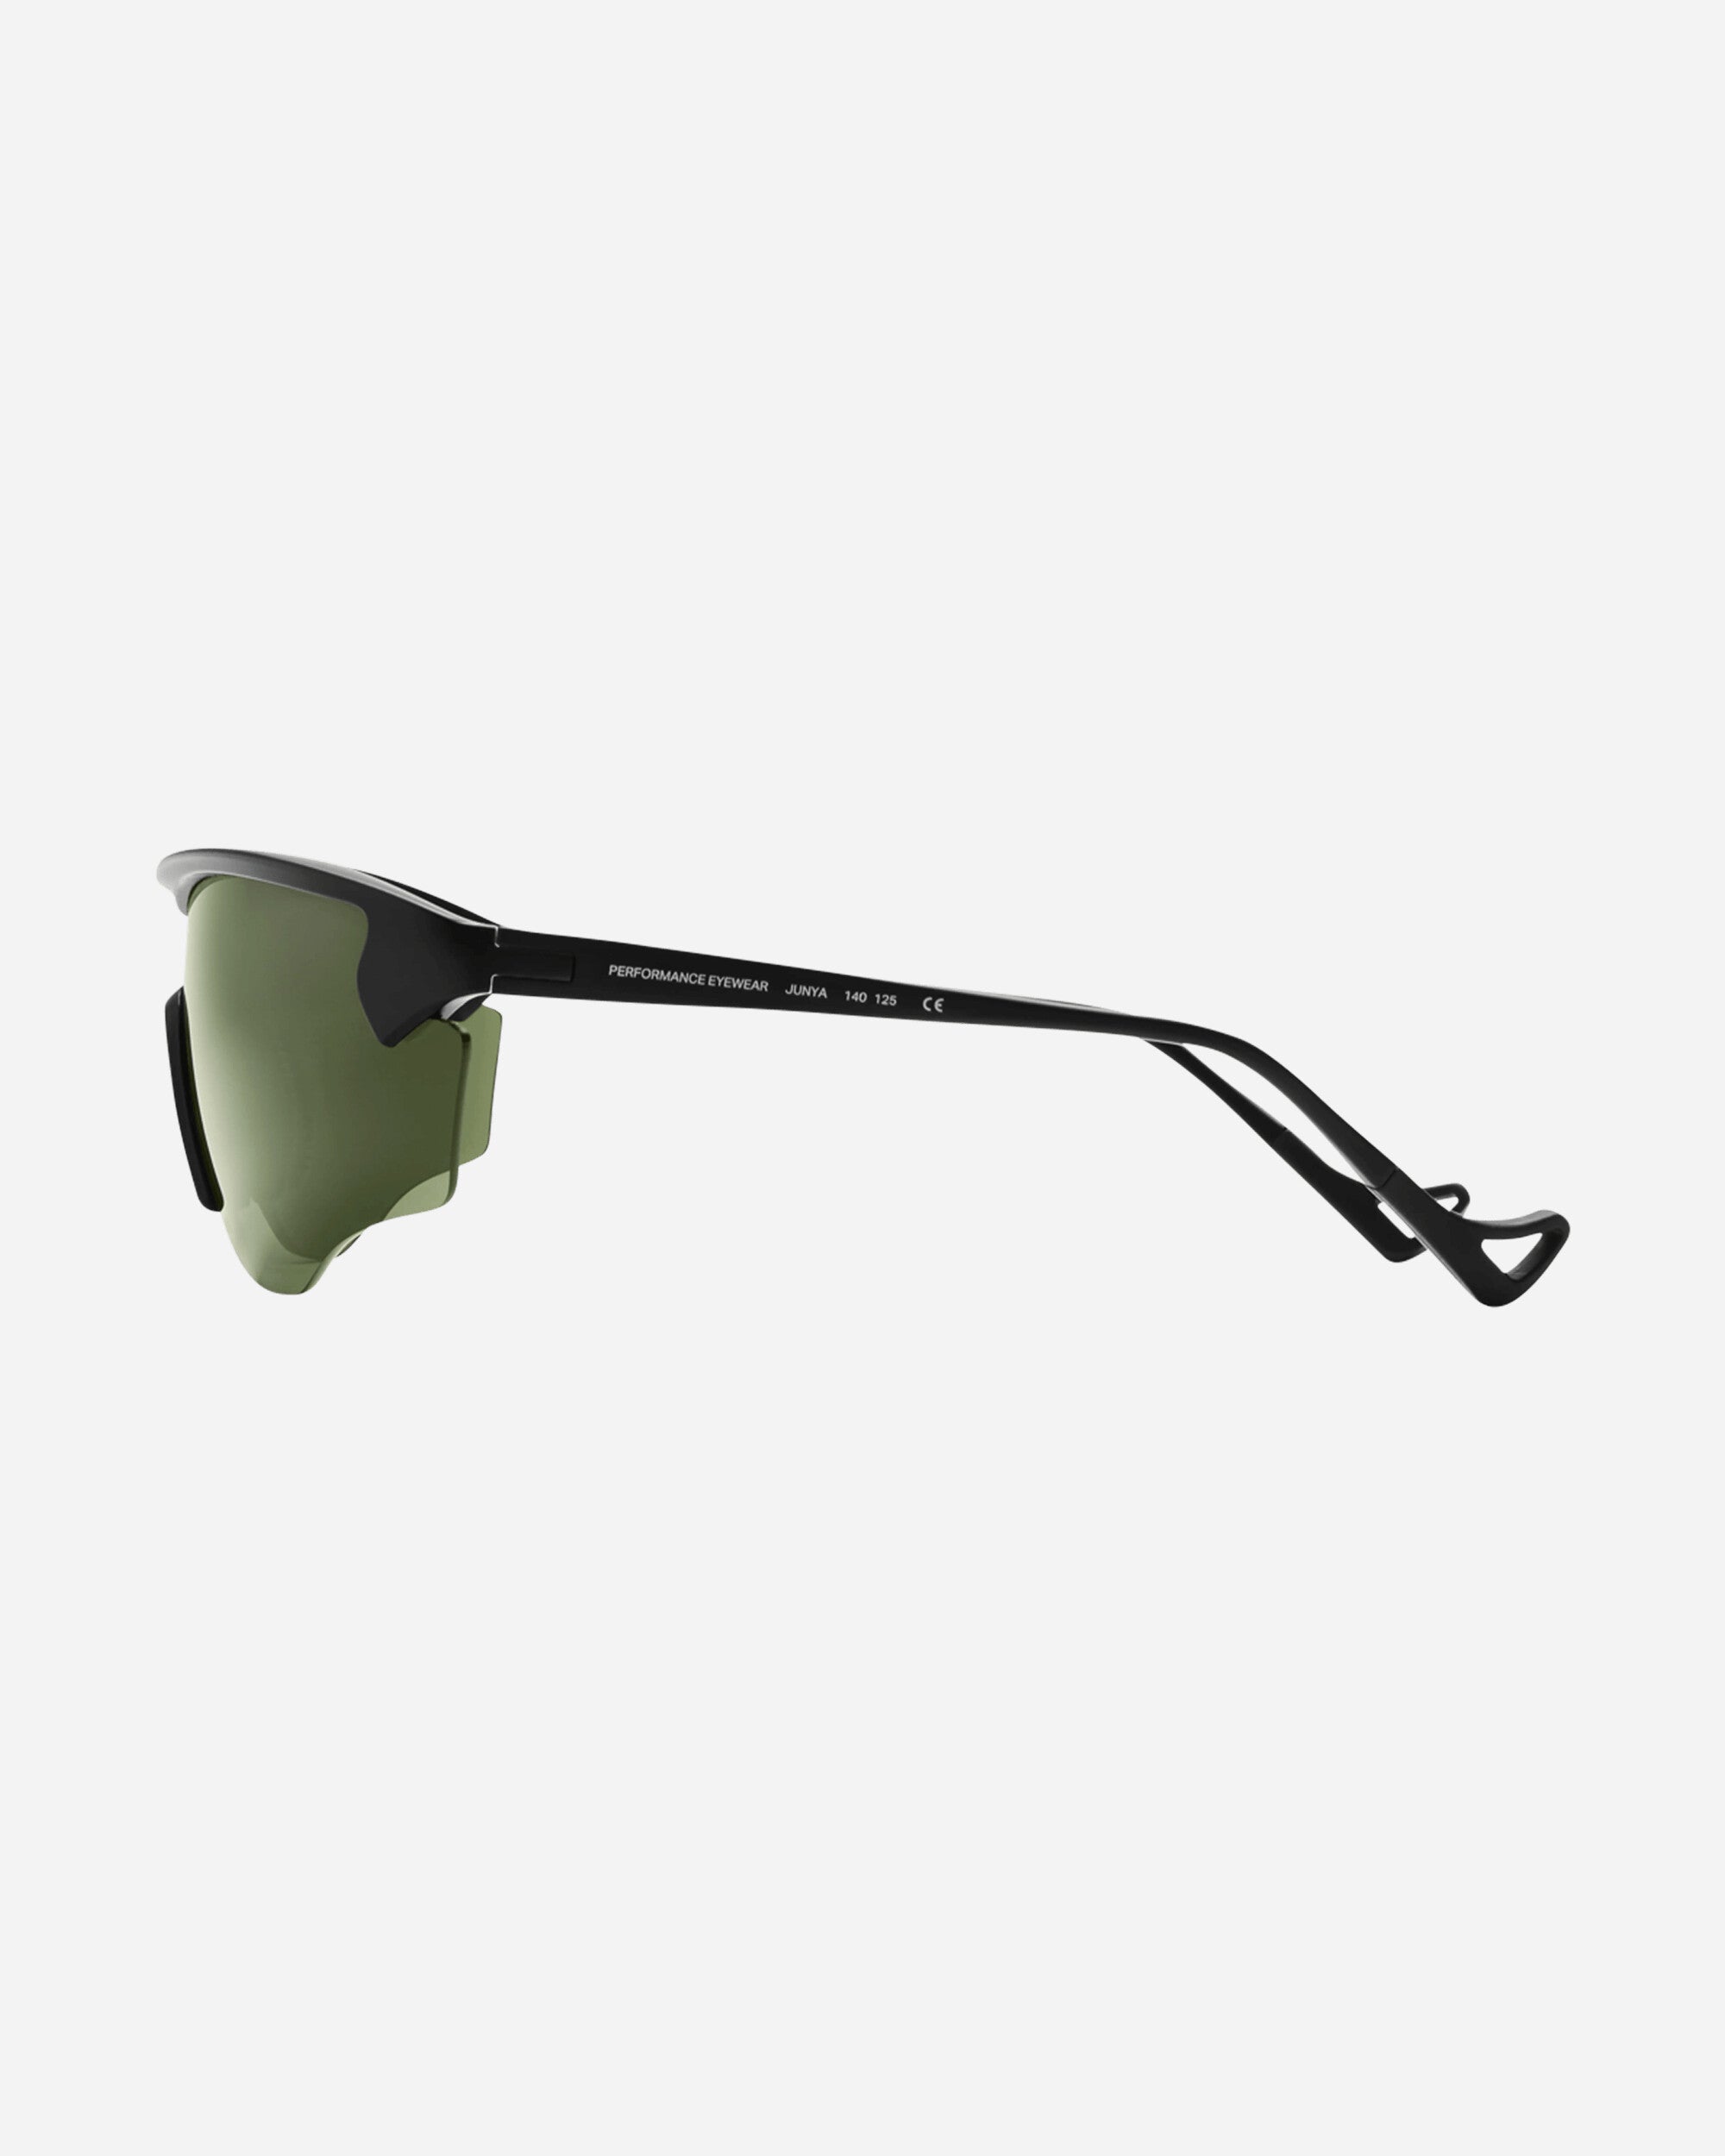 District Vision Junya Racer Black Eyewear Sunglasses DVG003 B